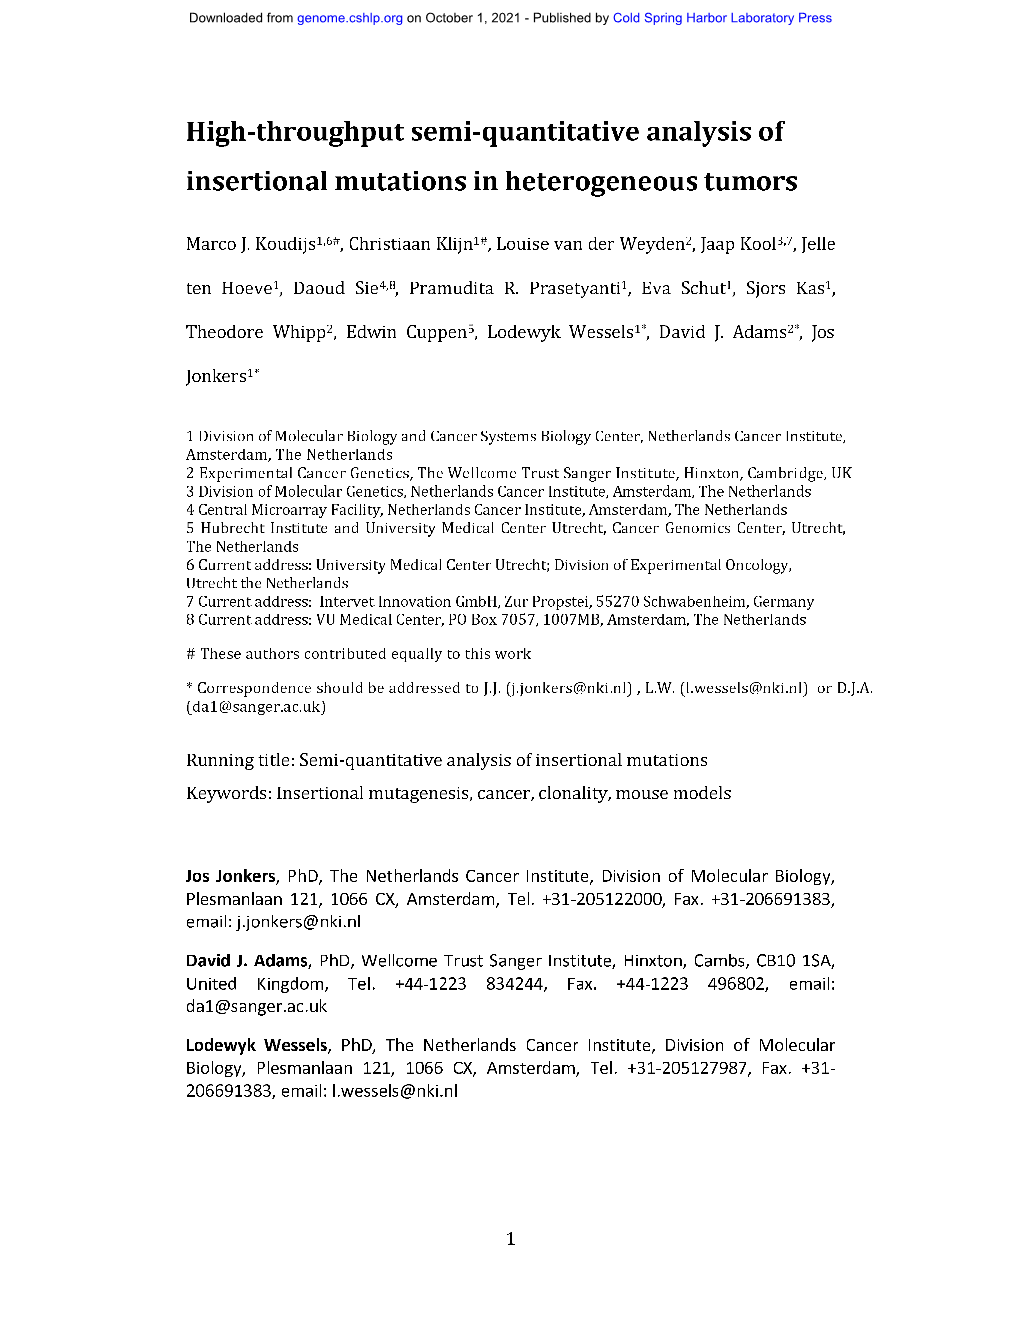 High-Throughput Semi-Quantitative Analysis of Insertional Mutations in Heterogeneous Tumors